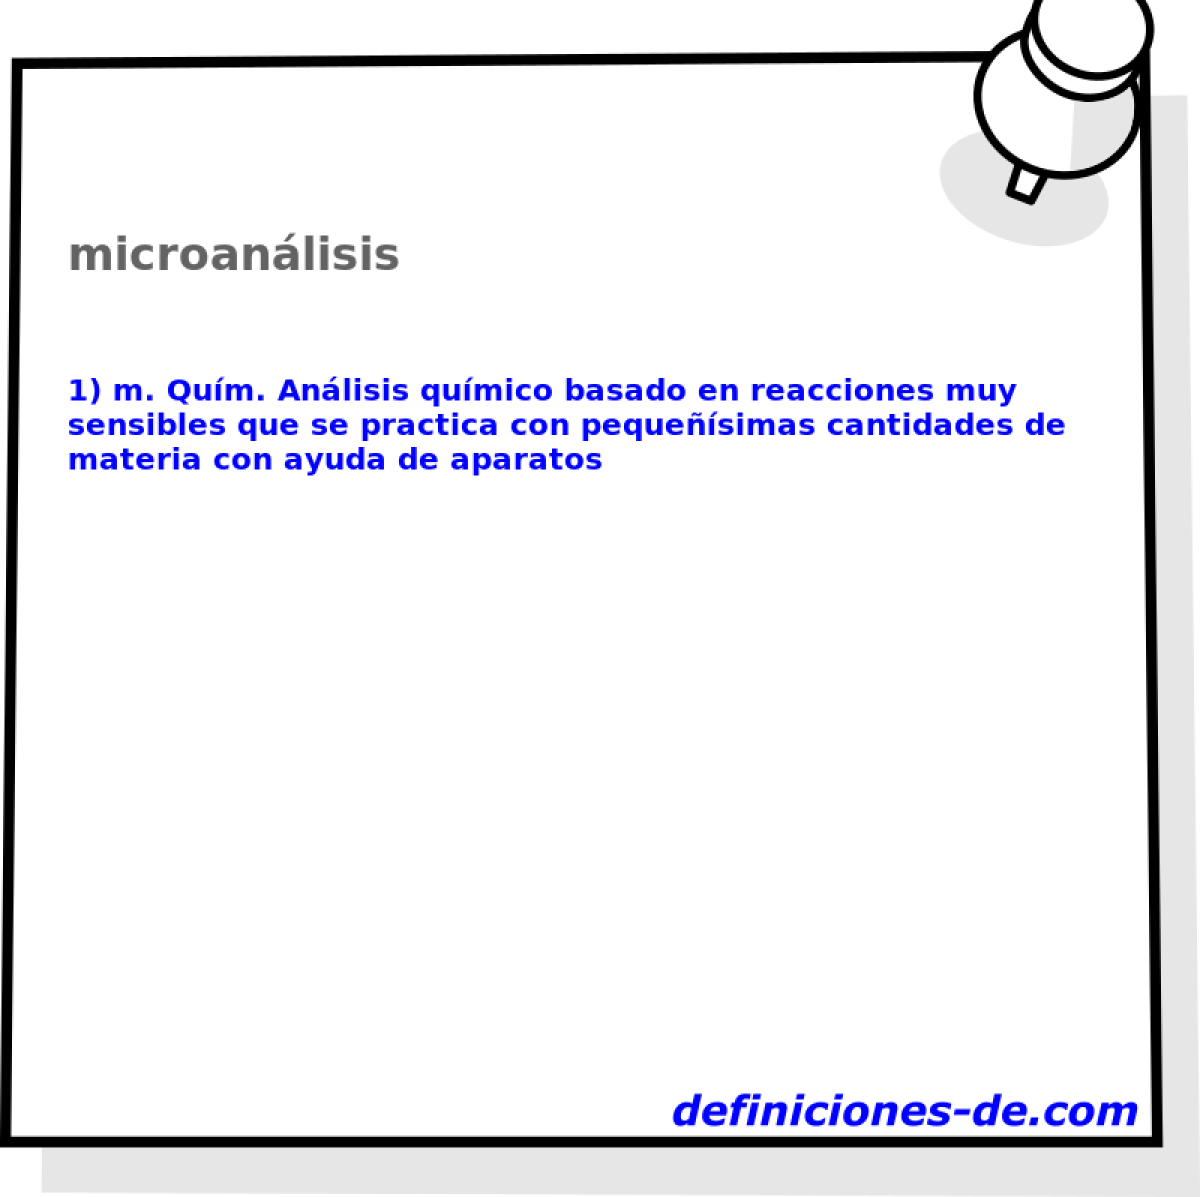 microanlisis 